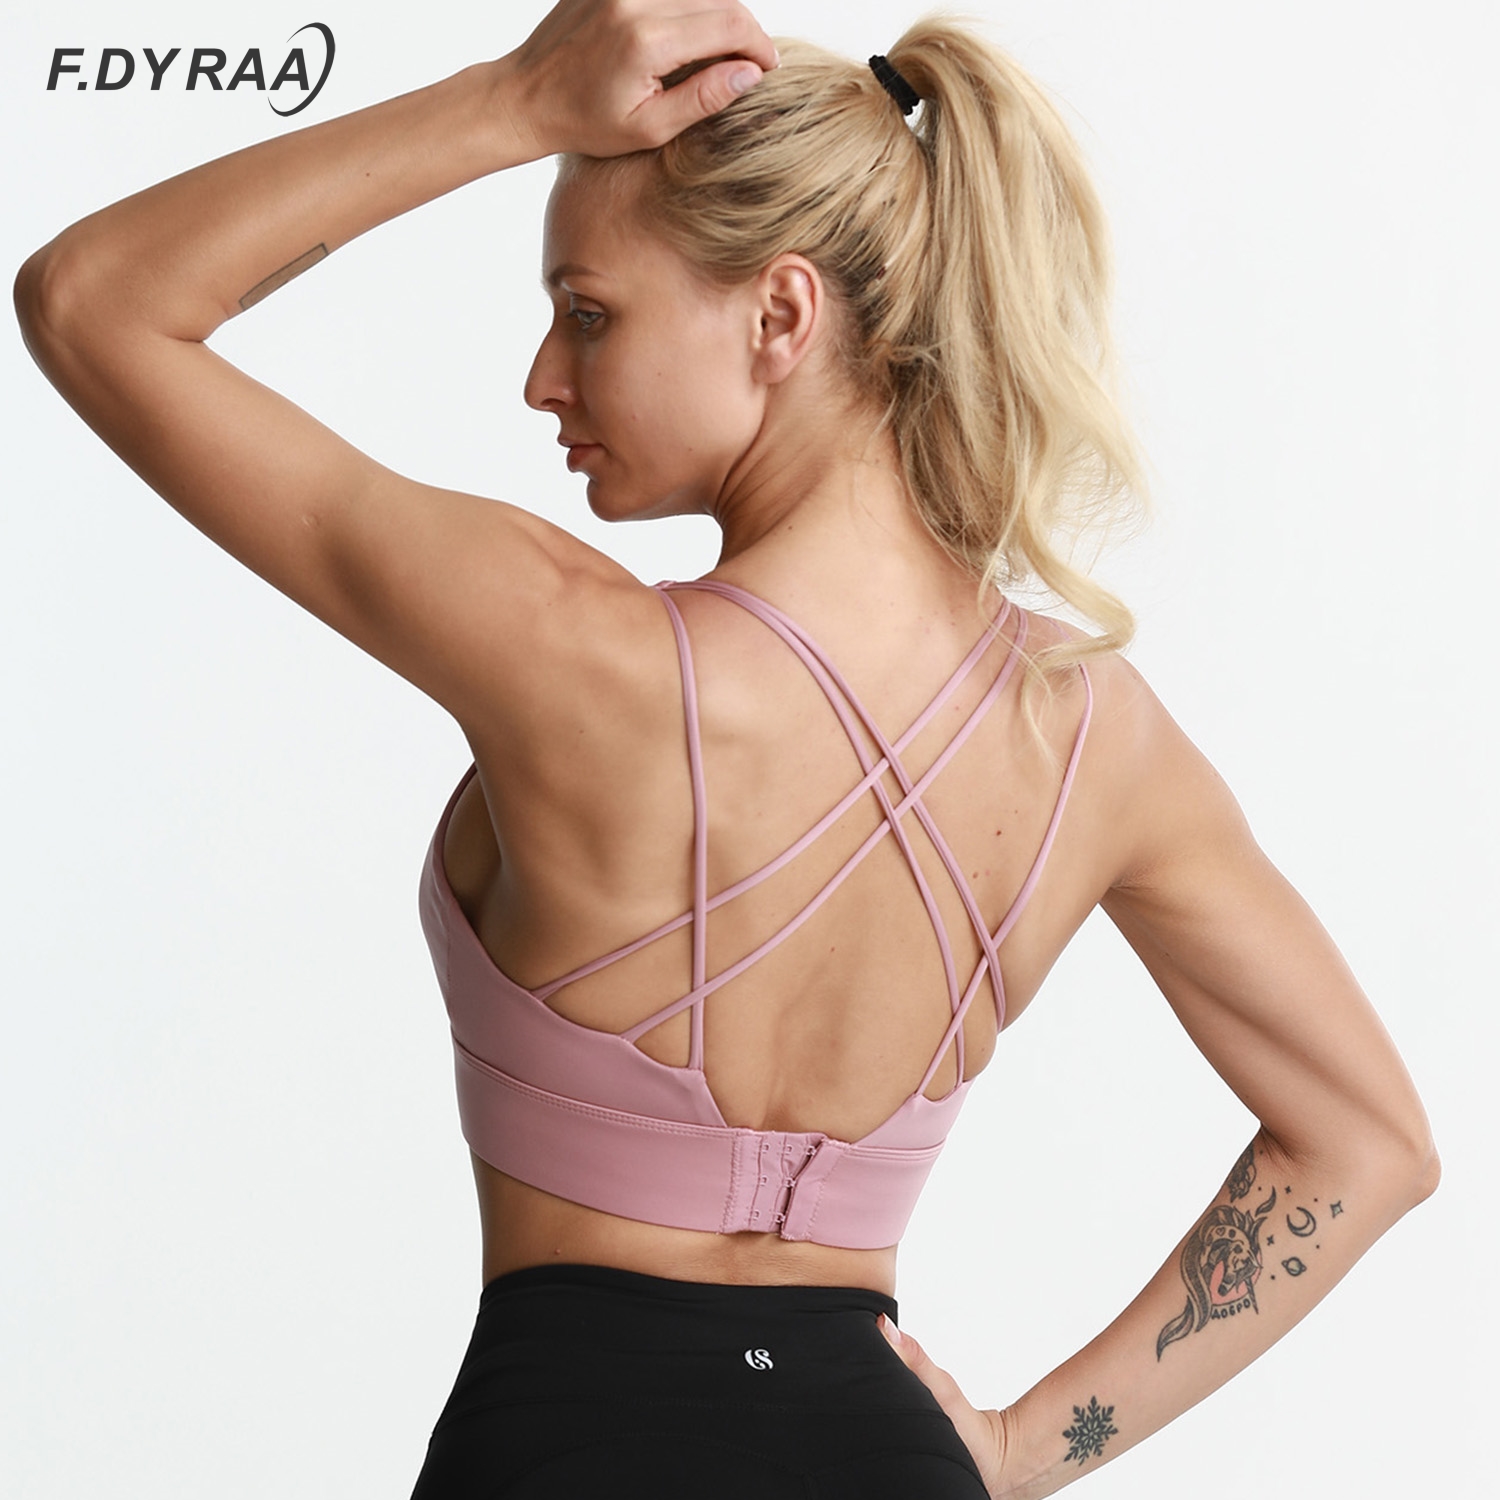 F.DYRAA Shockproof Cross Straps Bra Running Gym Sports Bra Top Women Widen Hem Push Up Workout Fitness Yoga Crop Tops Brassiere